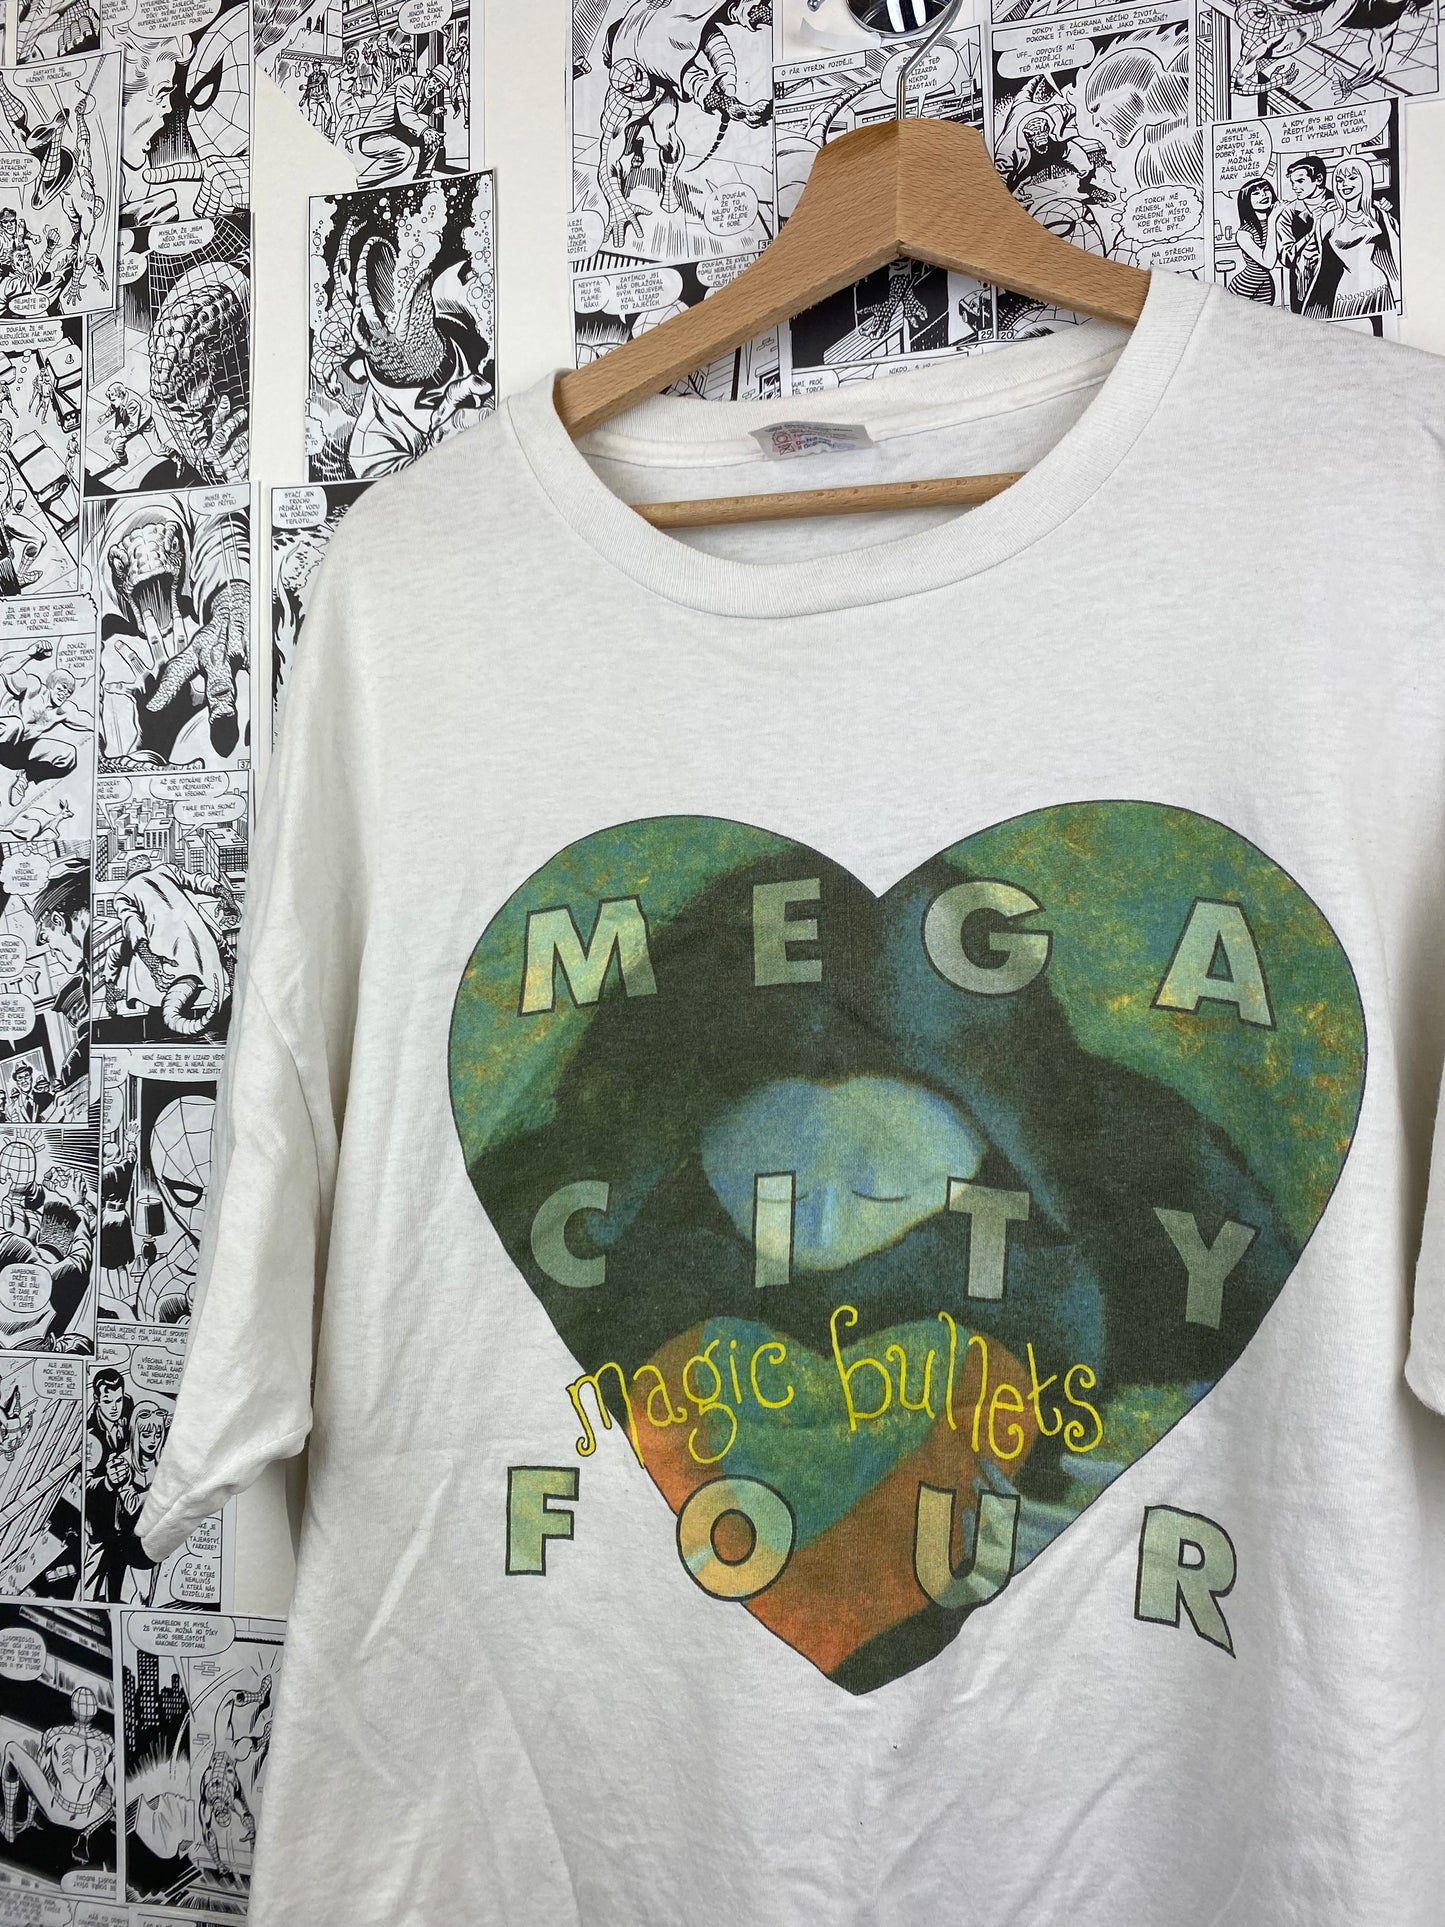 Vintage Mega City Four “Magic Bullets” 1993 t-shirt - size XL